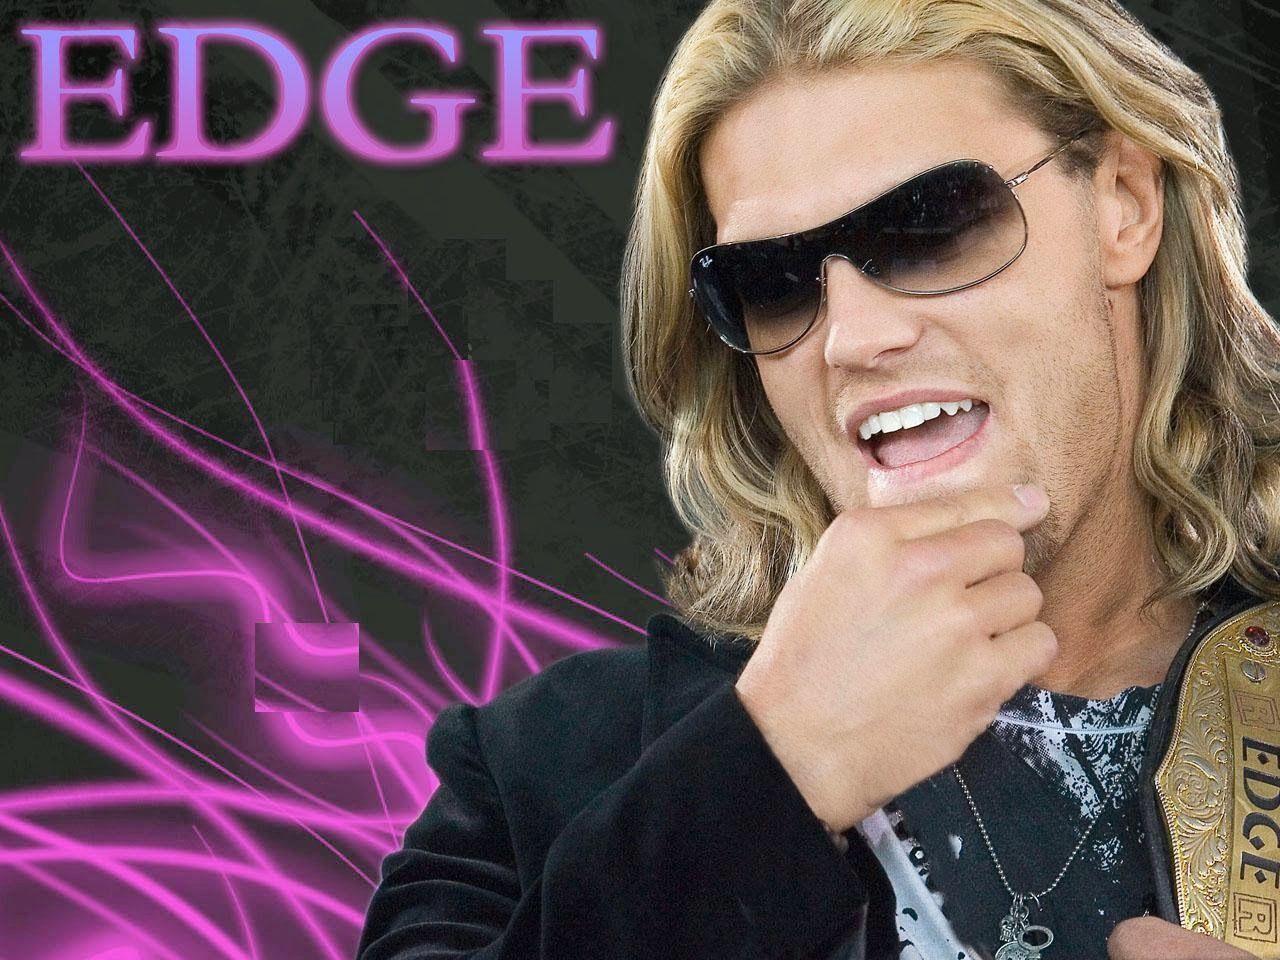 Edge HD Wallpaper Free Download. WWE HD WALLPAPER FREE DOWNLOAD